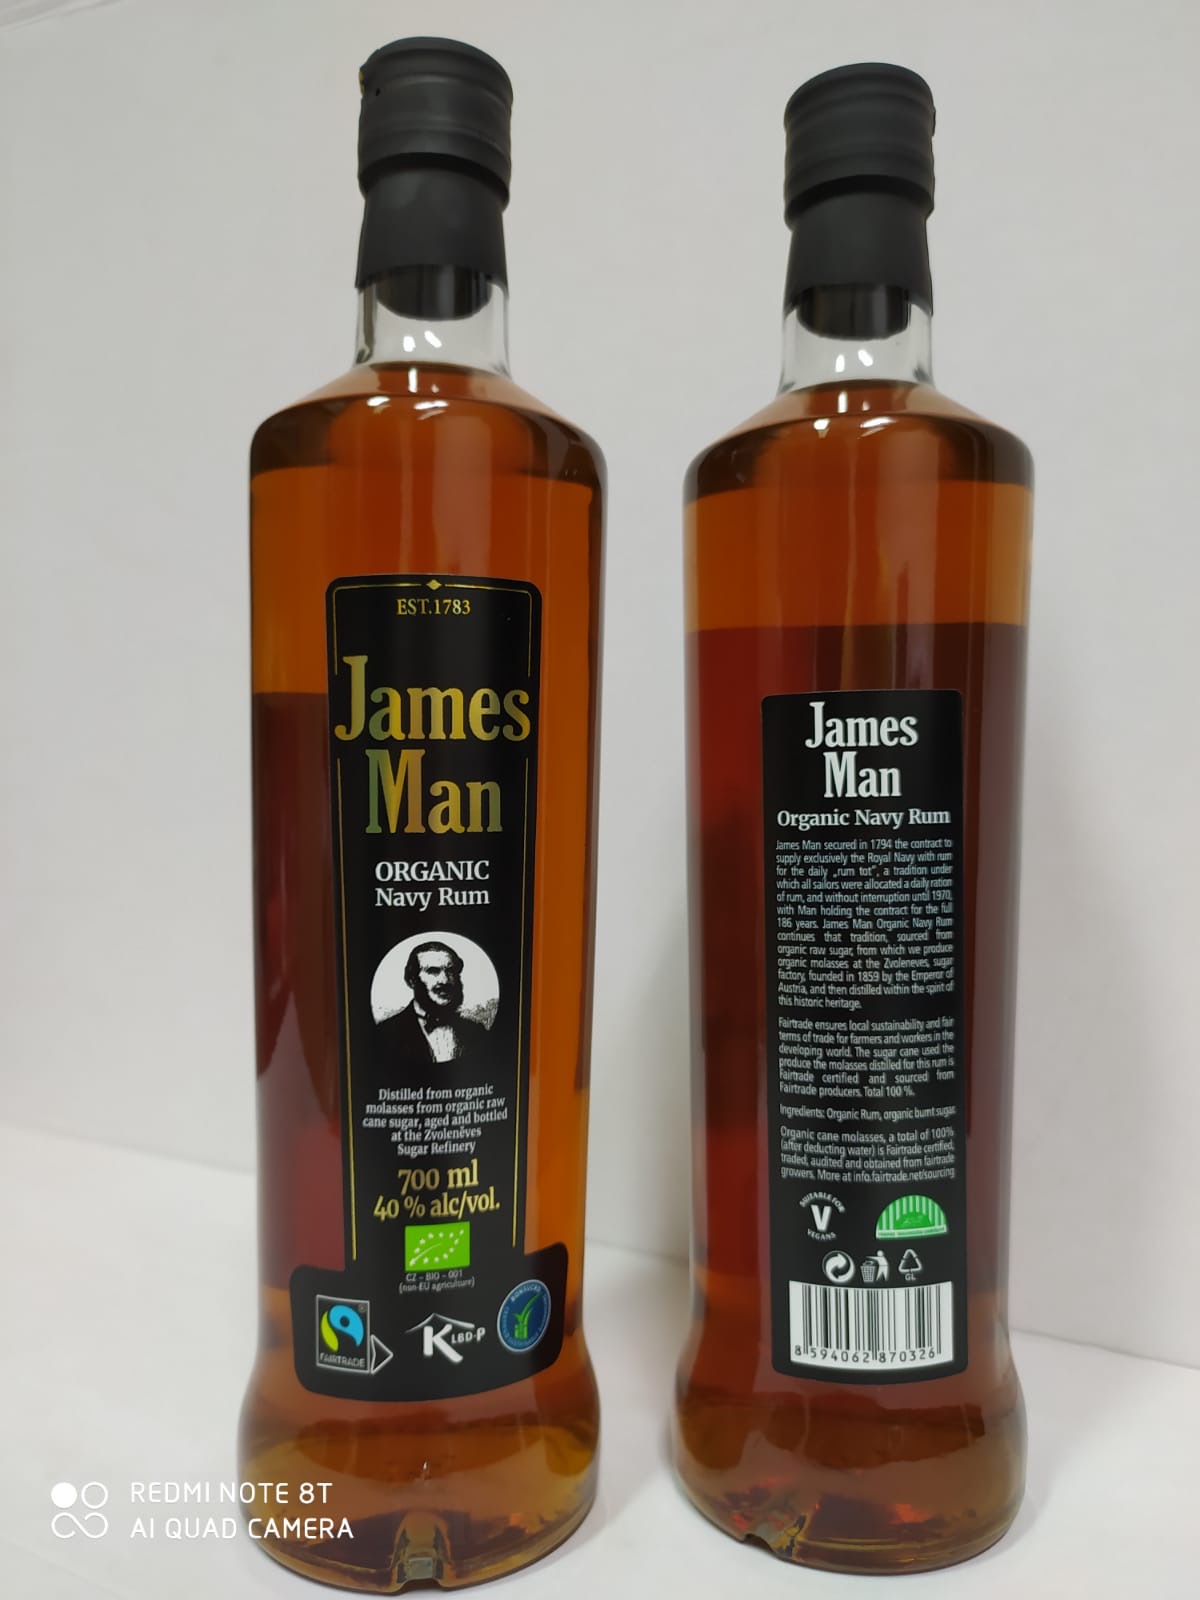 James Man Organic Navy Rum